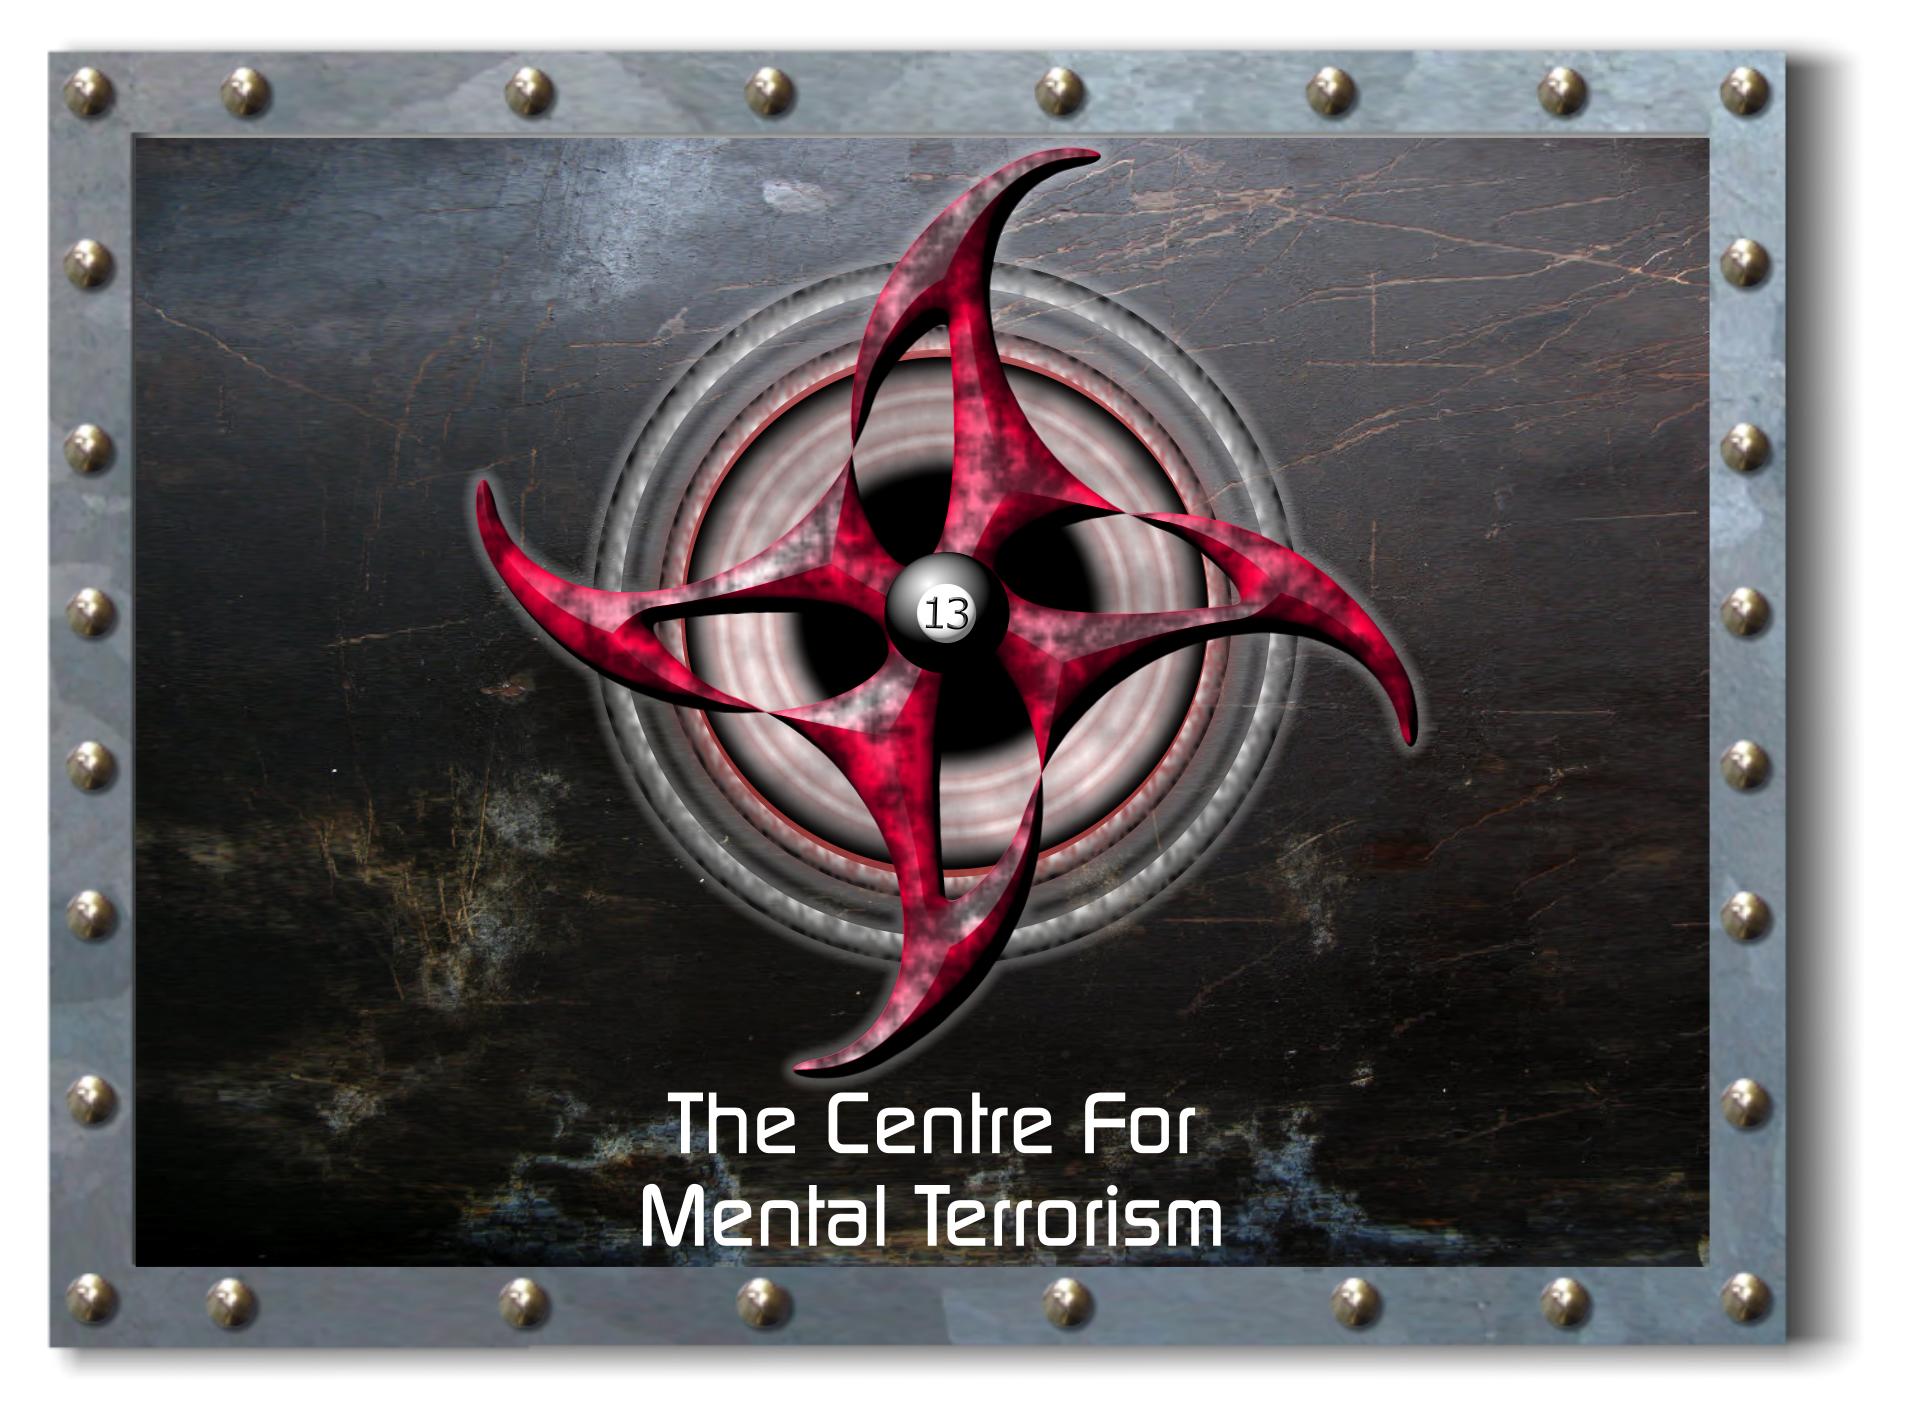 Abstract dark industrial artwork titled Mental Terrorism by NervisGrafix.